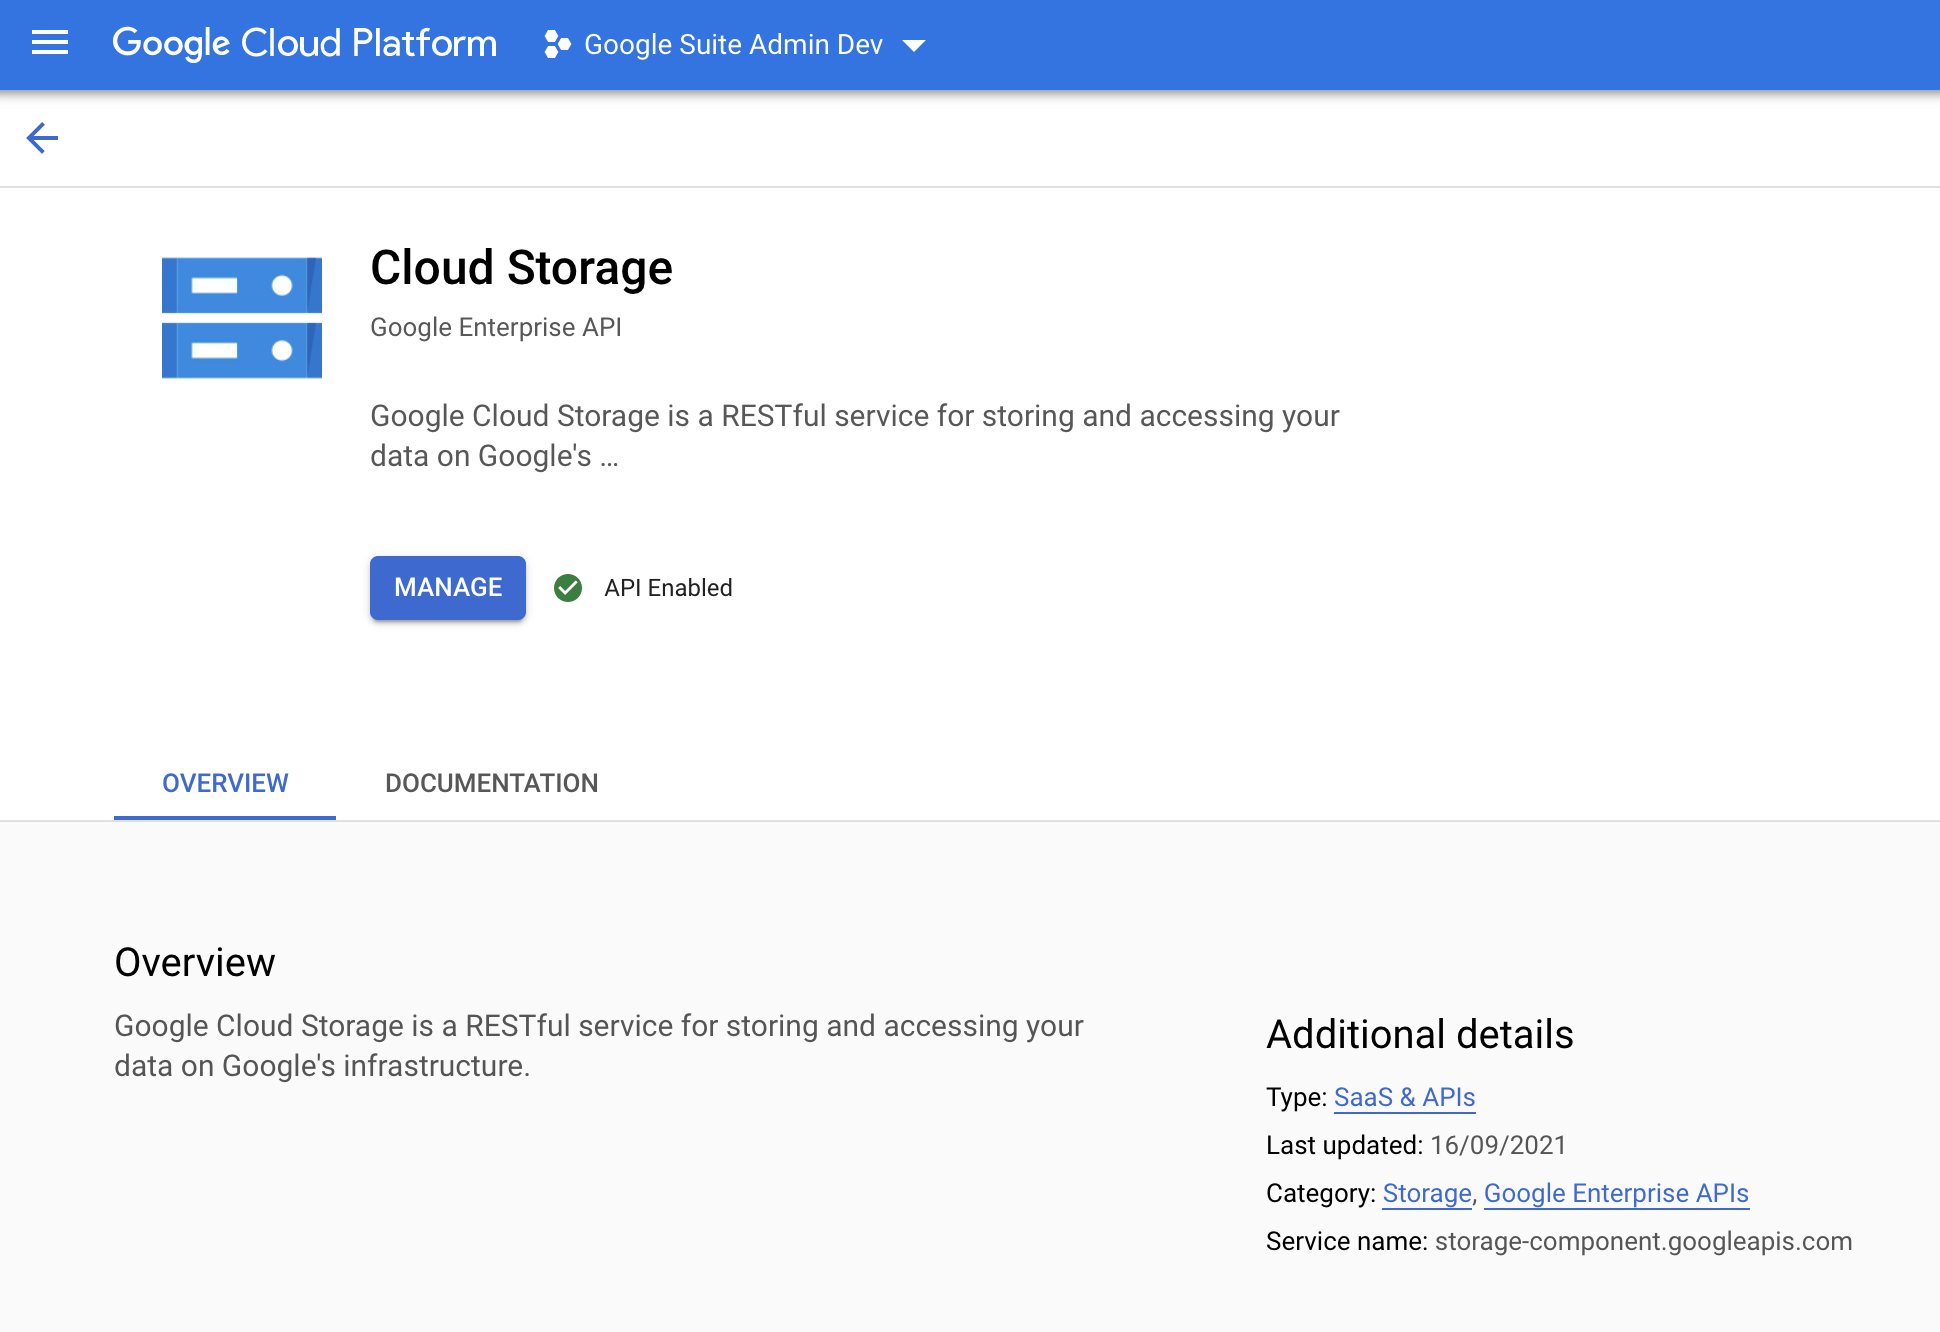 Enable Google Cloud Storage API in the Google Cloud Platform